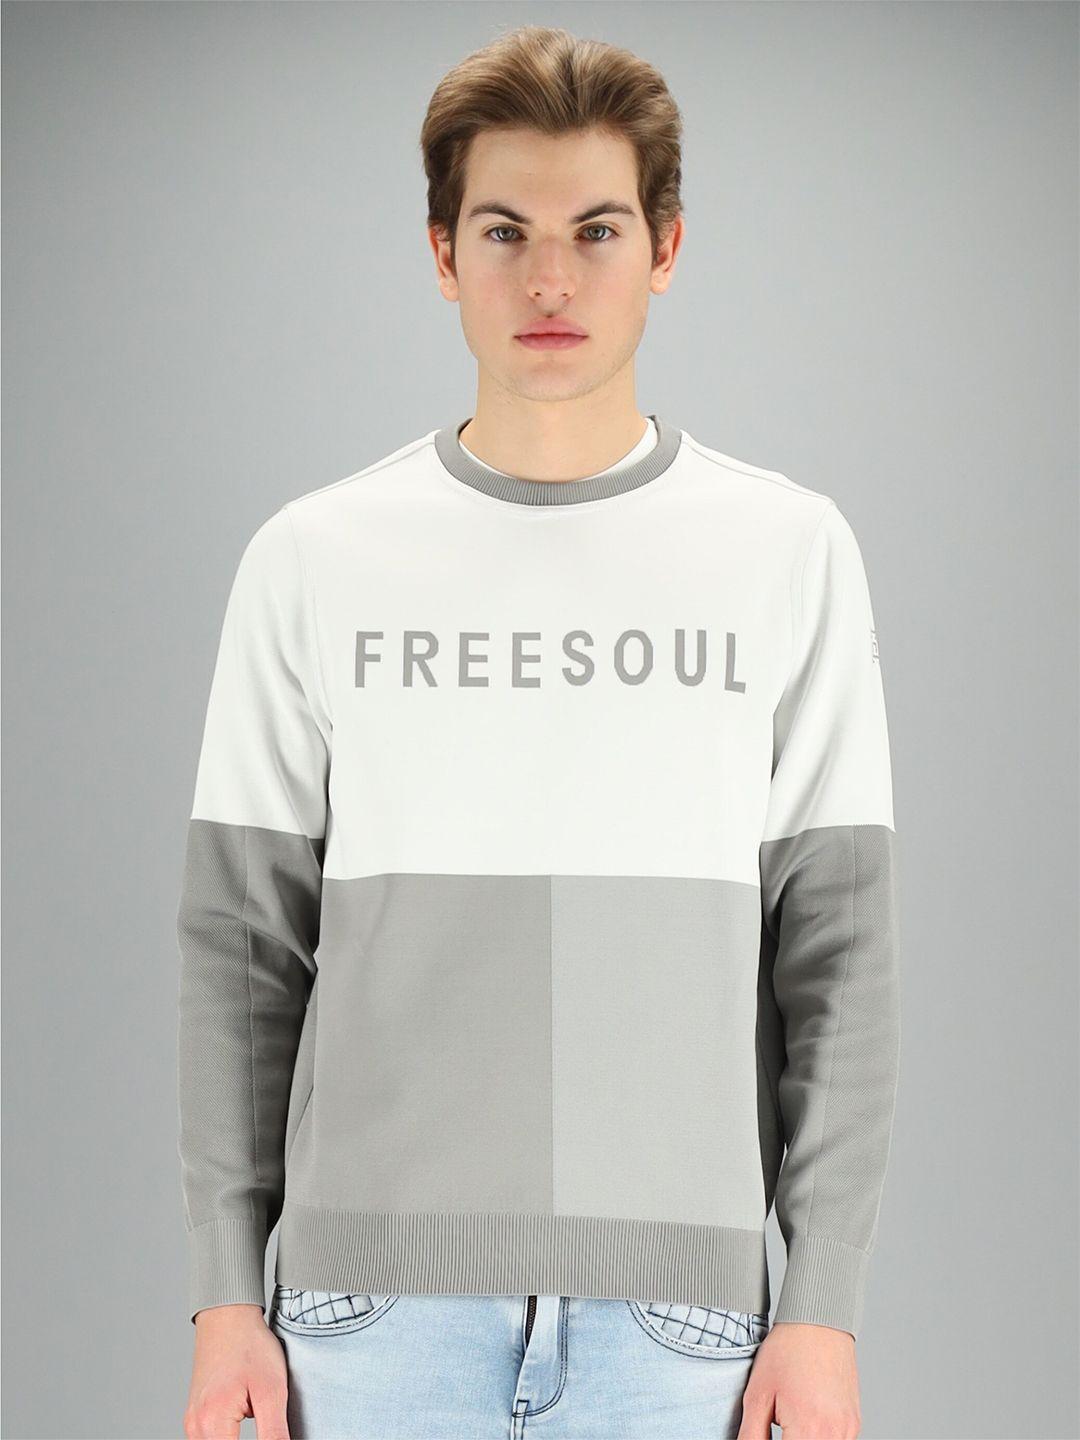 freesoul-men-grey-&-white-colourblocked-sweatshirt